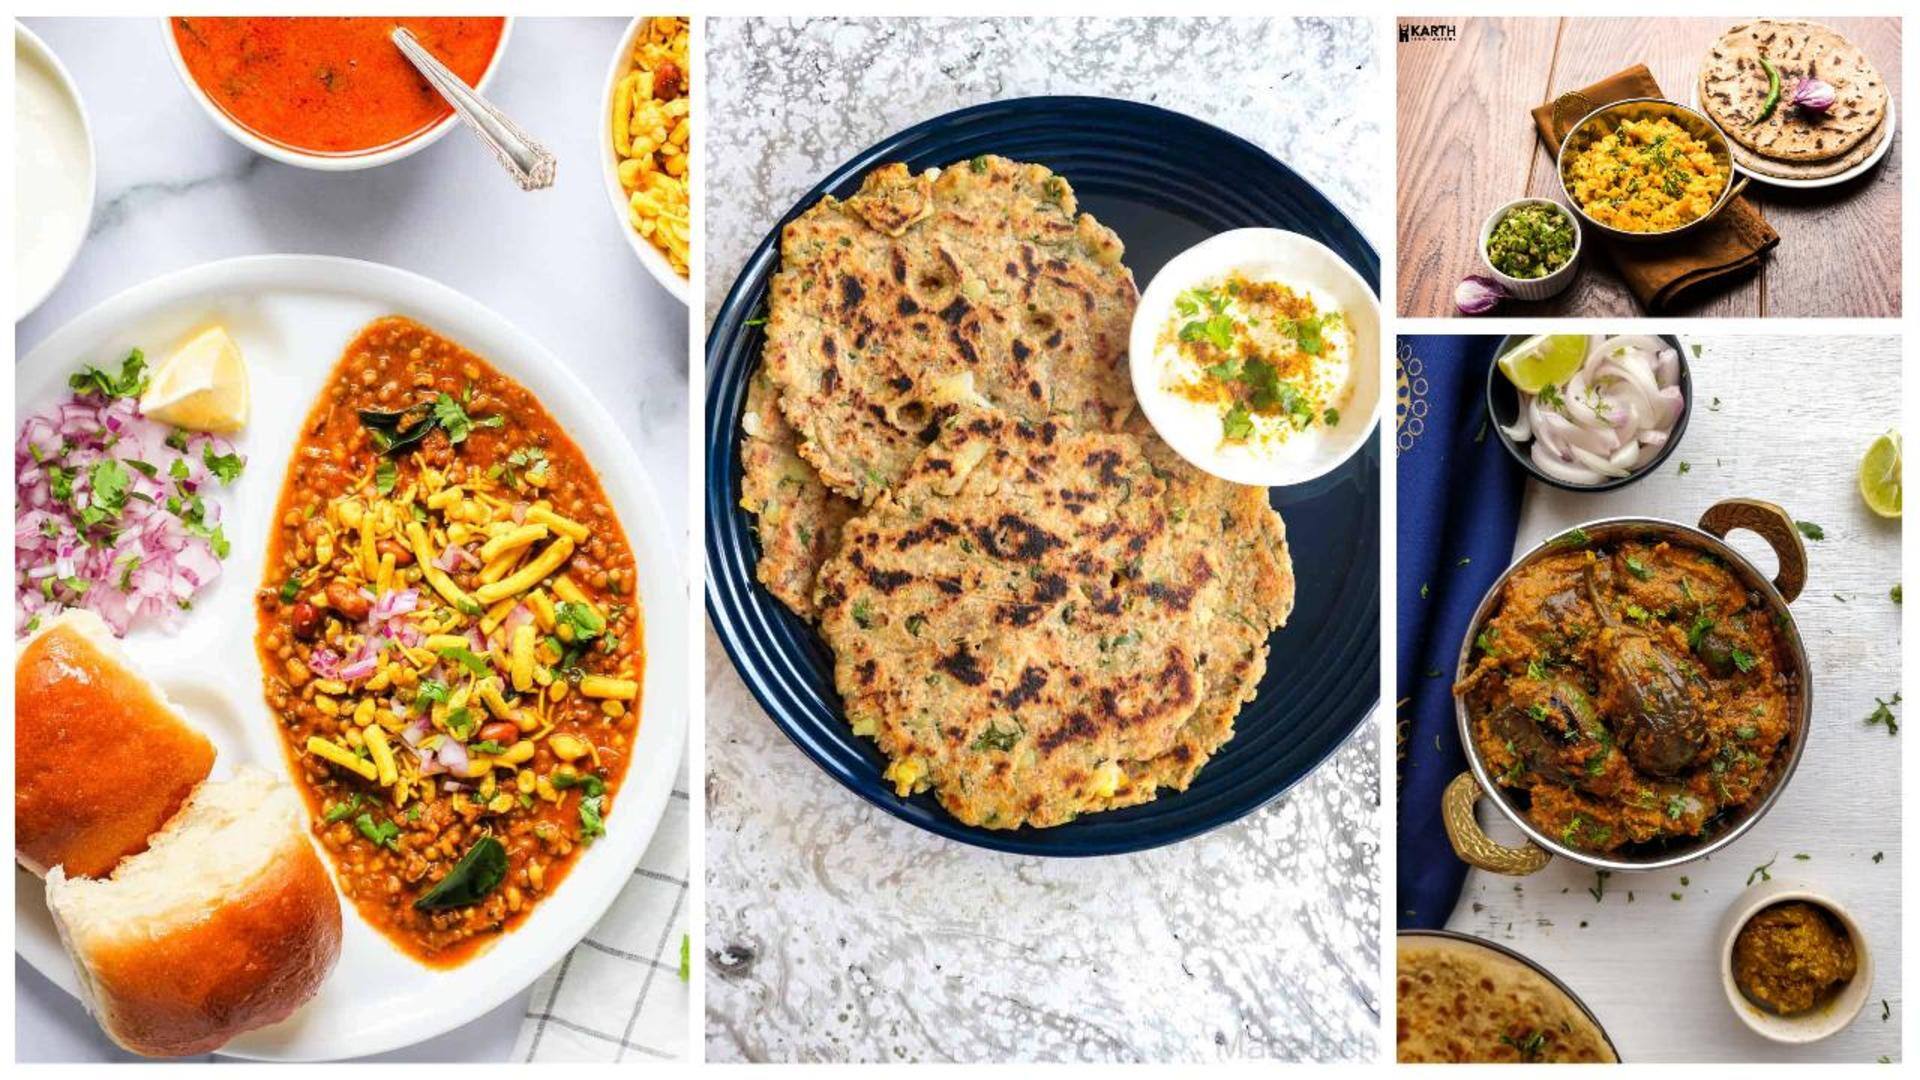 Love Pav bhaji? 5 more Maharashtrian dishes you'll enjoy